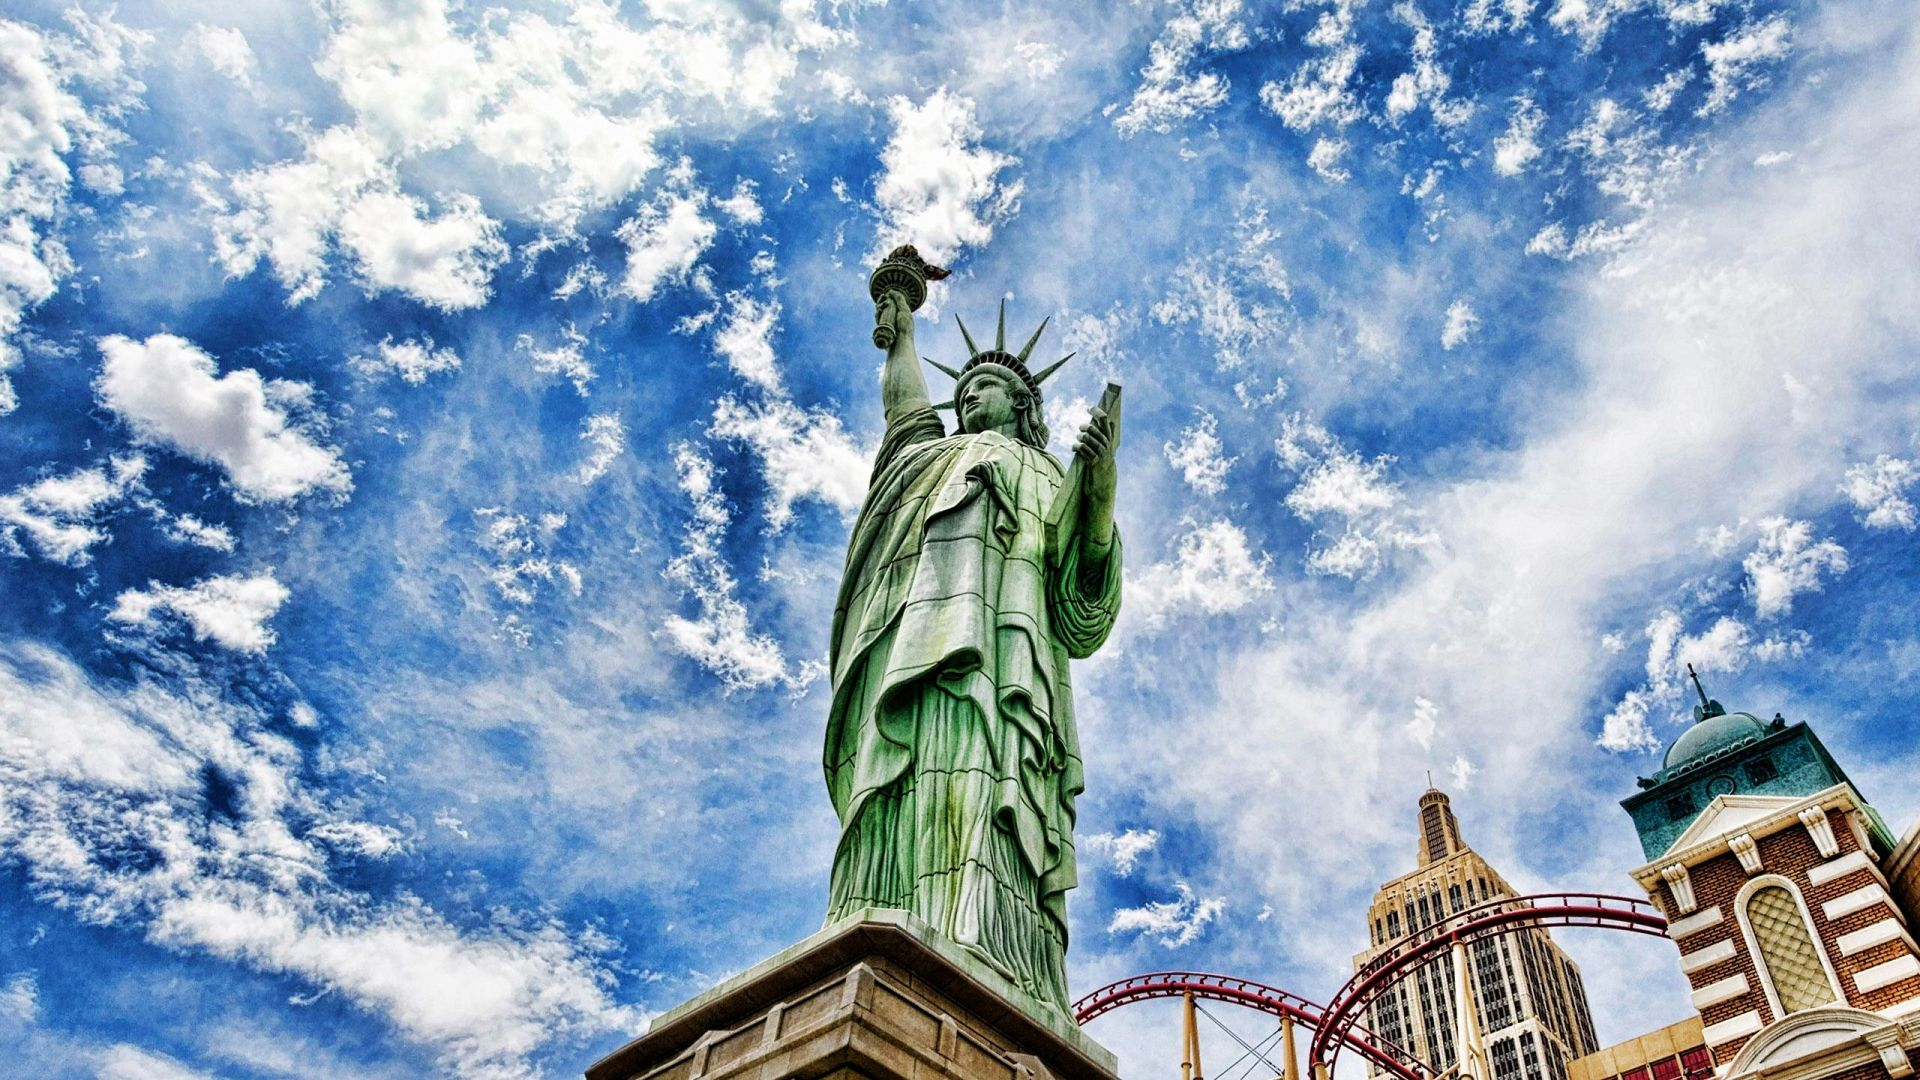 1920x1080 Pin by Arun Rajali on vizoos | Liberty wallpaper, Statue of liberty, New york statue